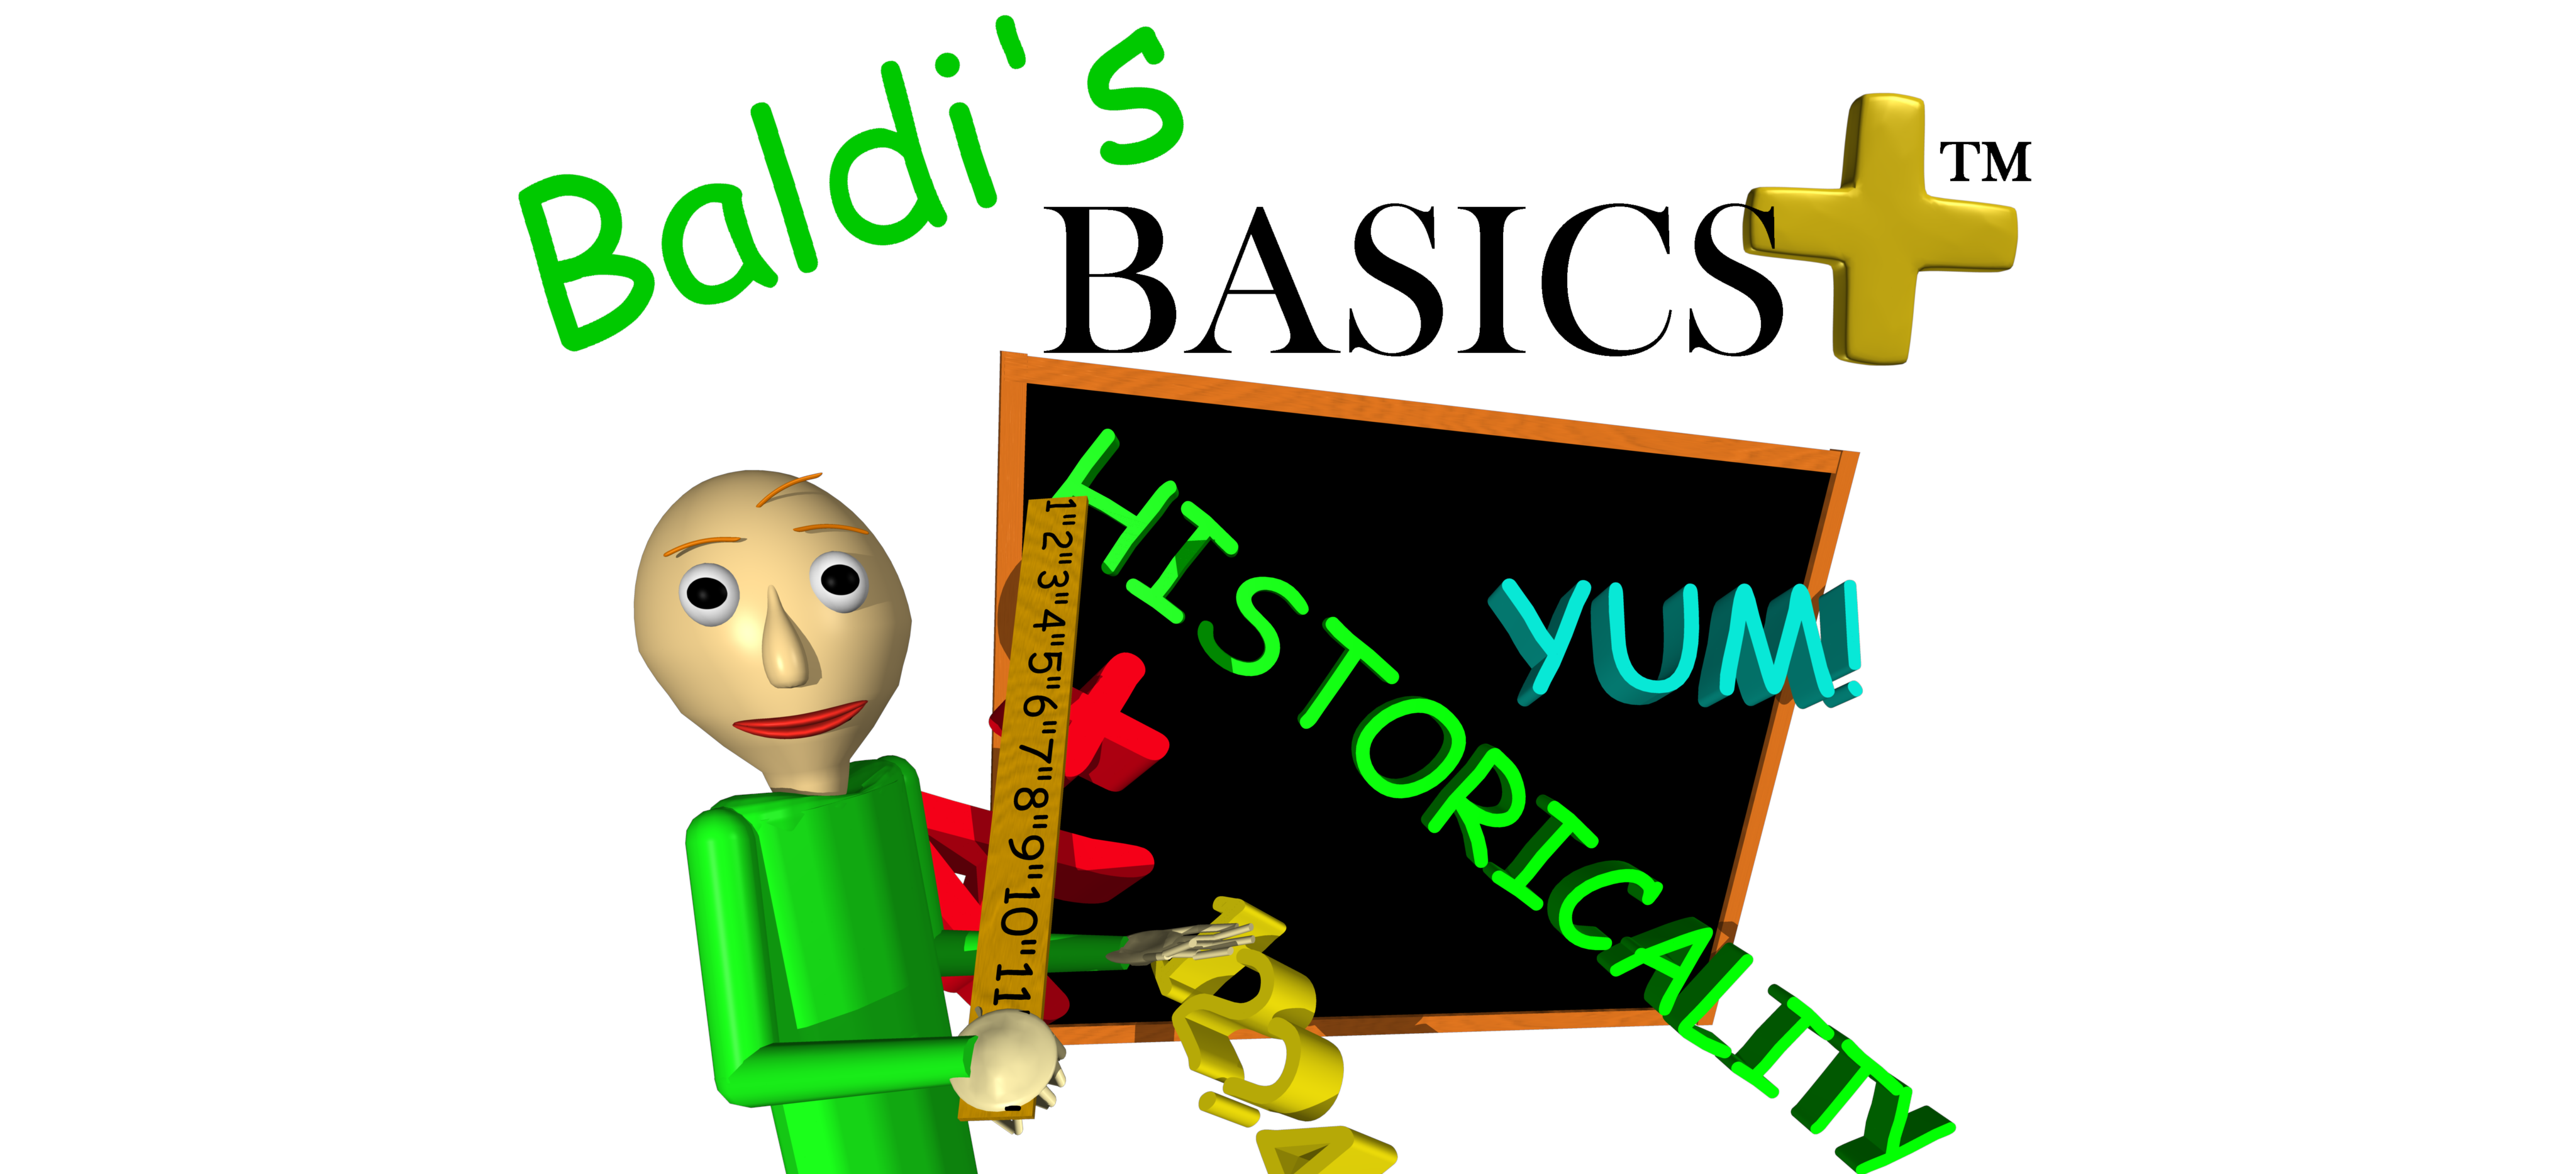 Baldis Basics Characters New